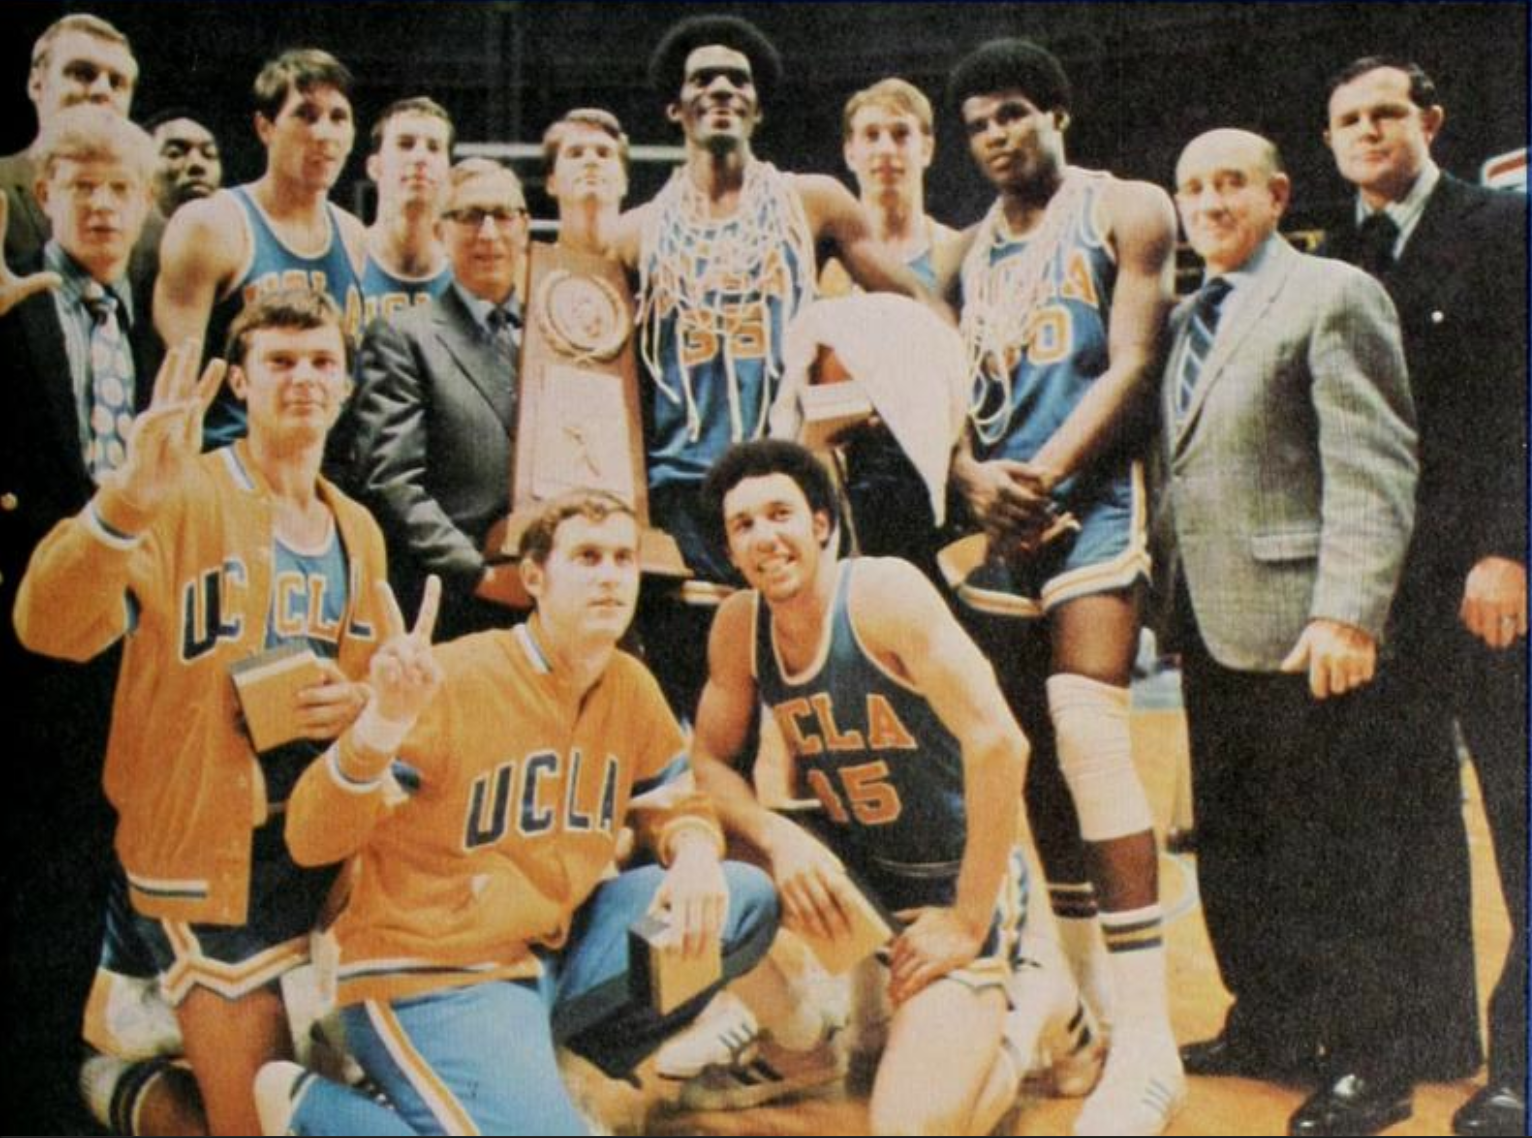 1970 UCLA wins its sixth NCAA championship